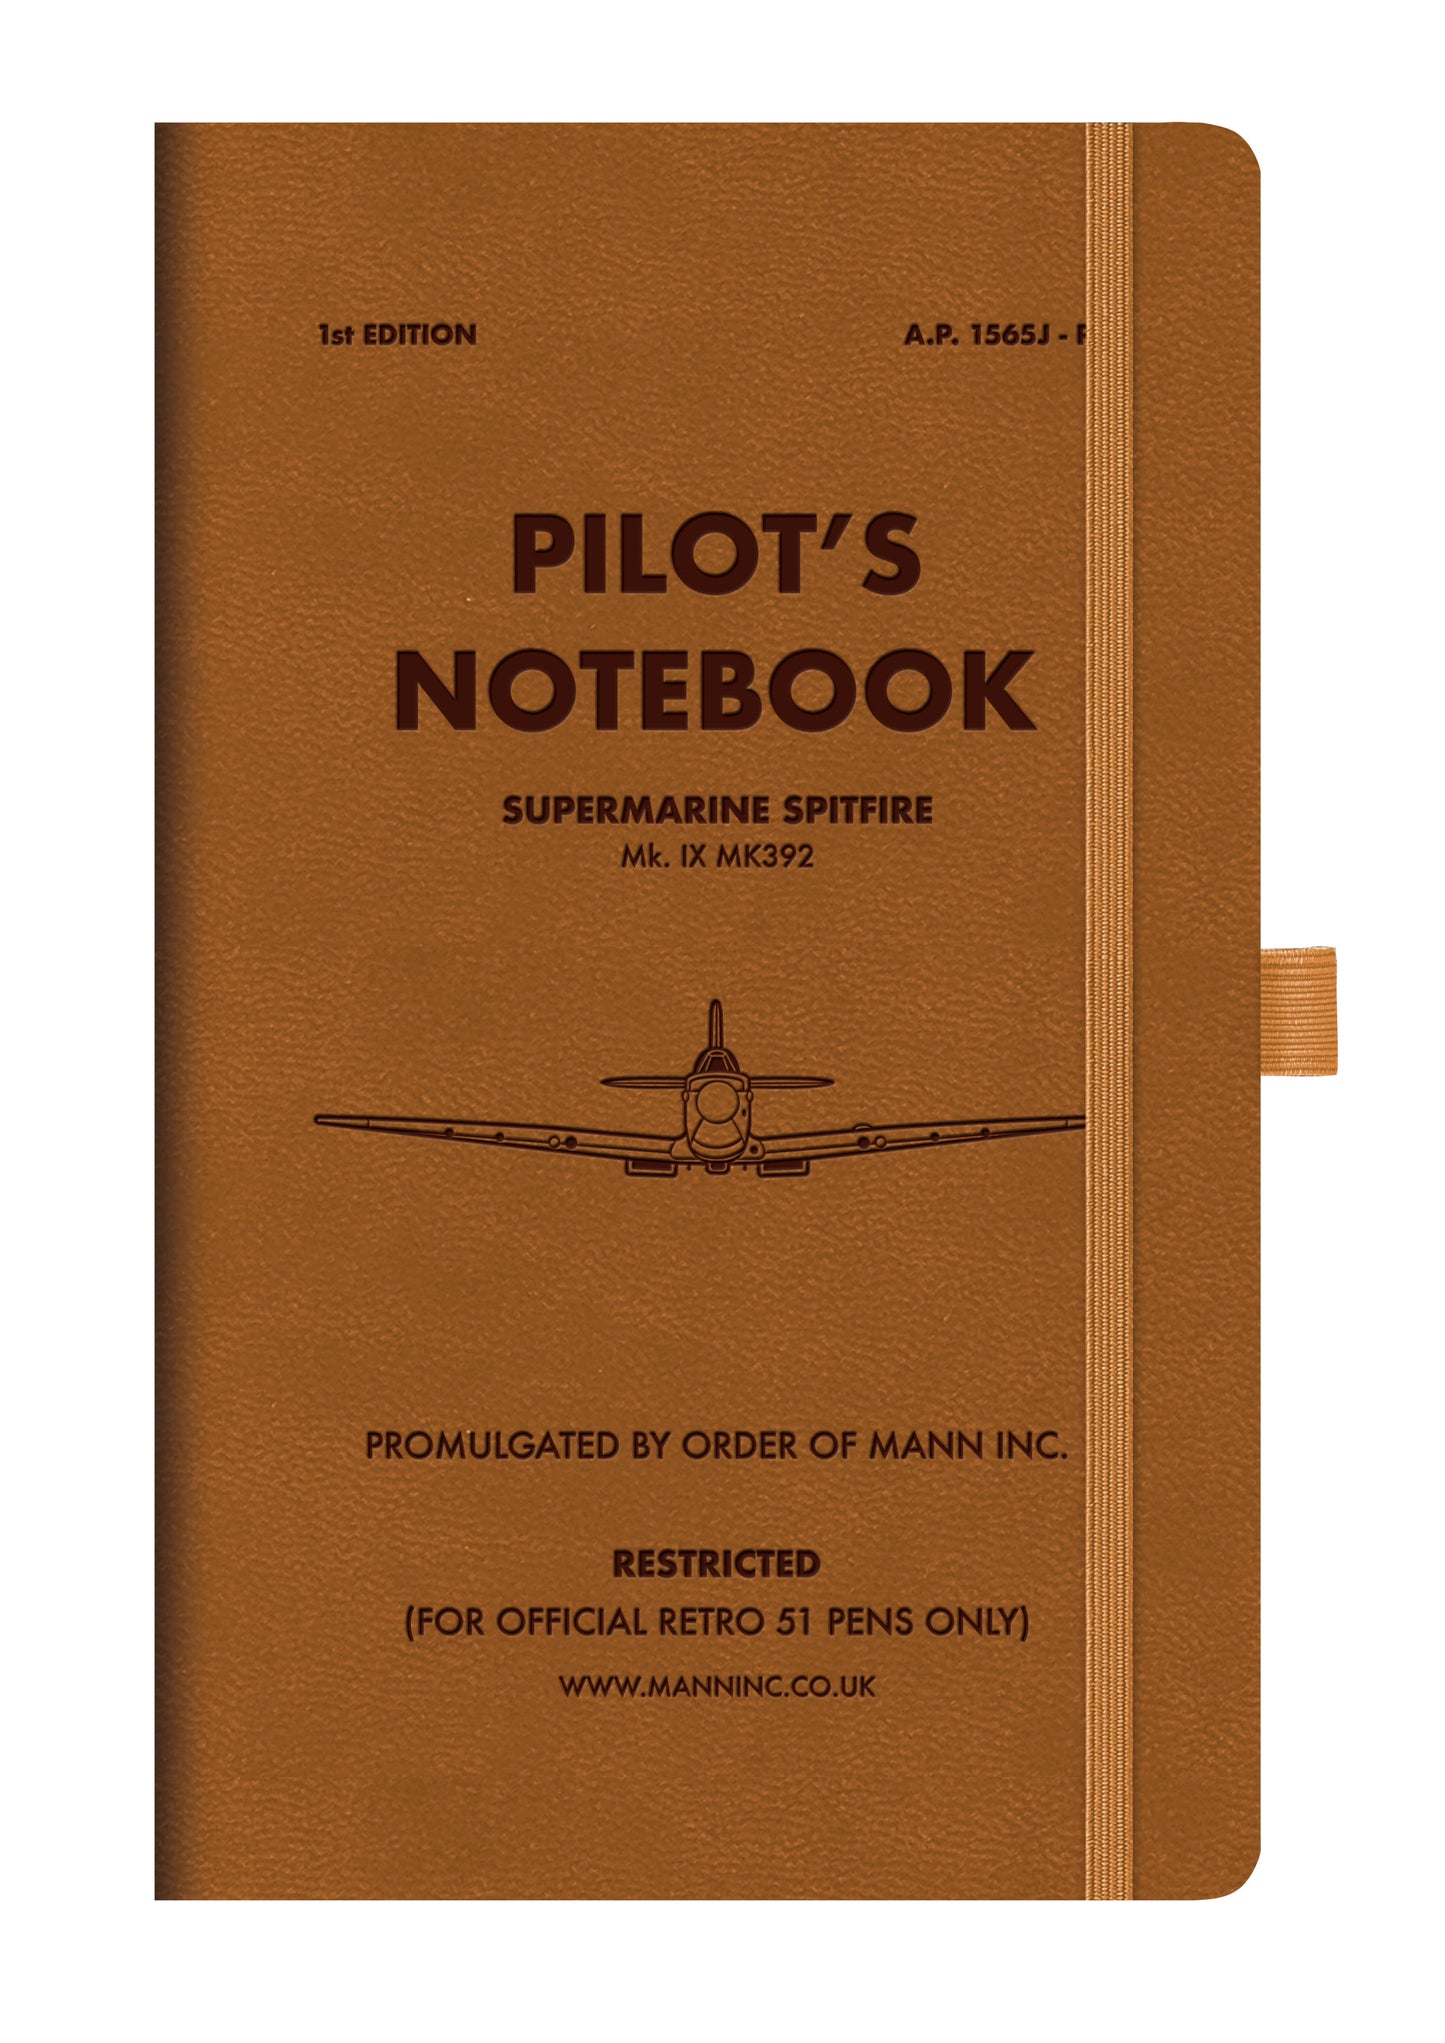 Replica Pilots Notes Medium Ruled Flexible Notebook - Spitfire